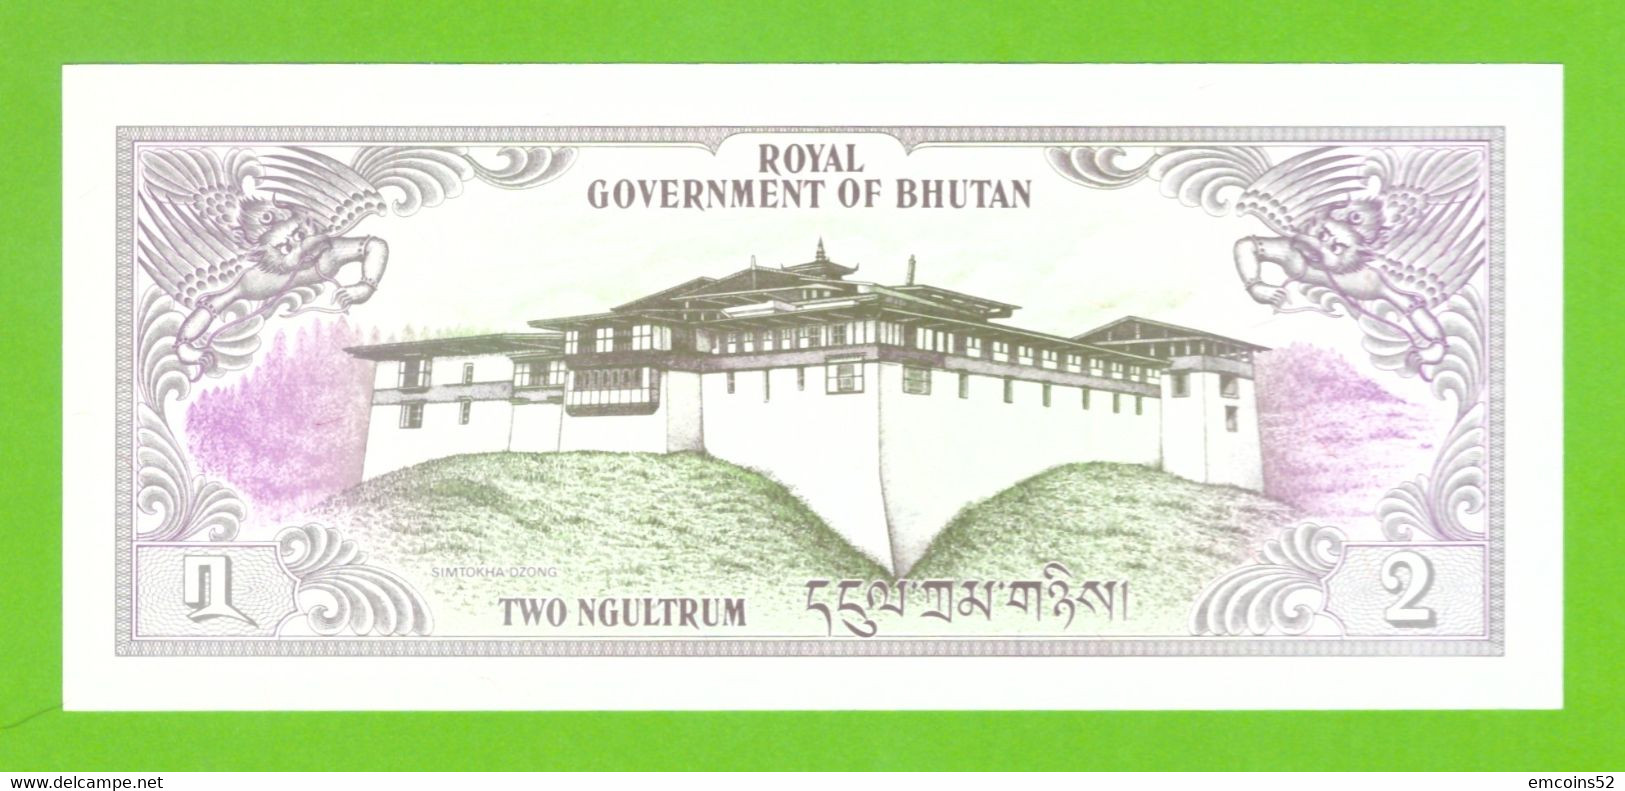 BHUTAN 2 NGULTRUM 1981 P-6  UNC - Bhoutan